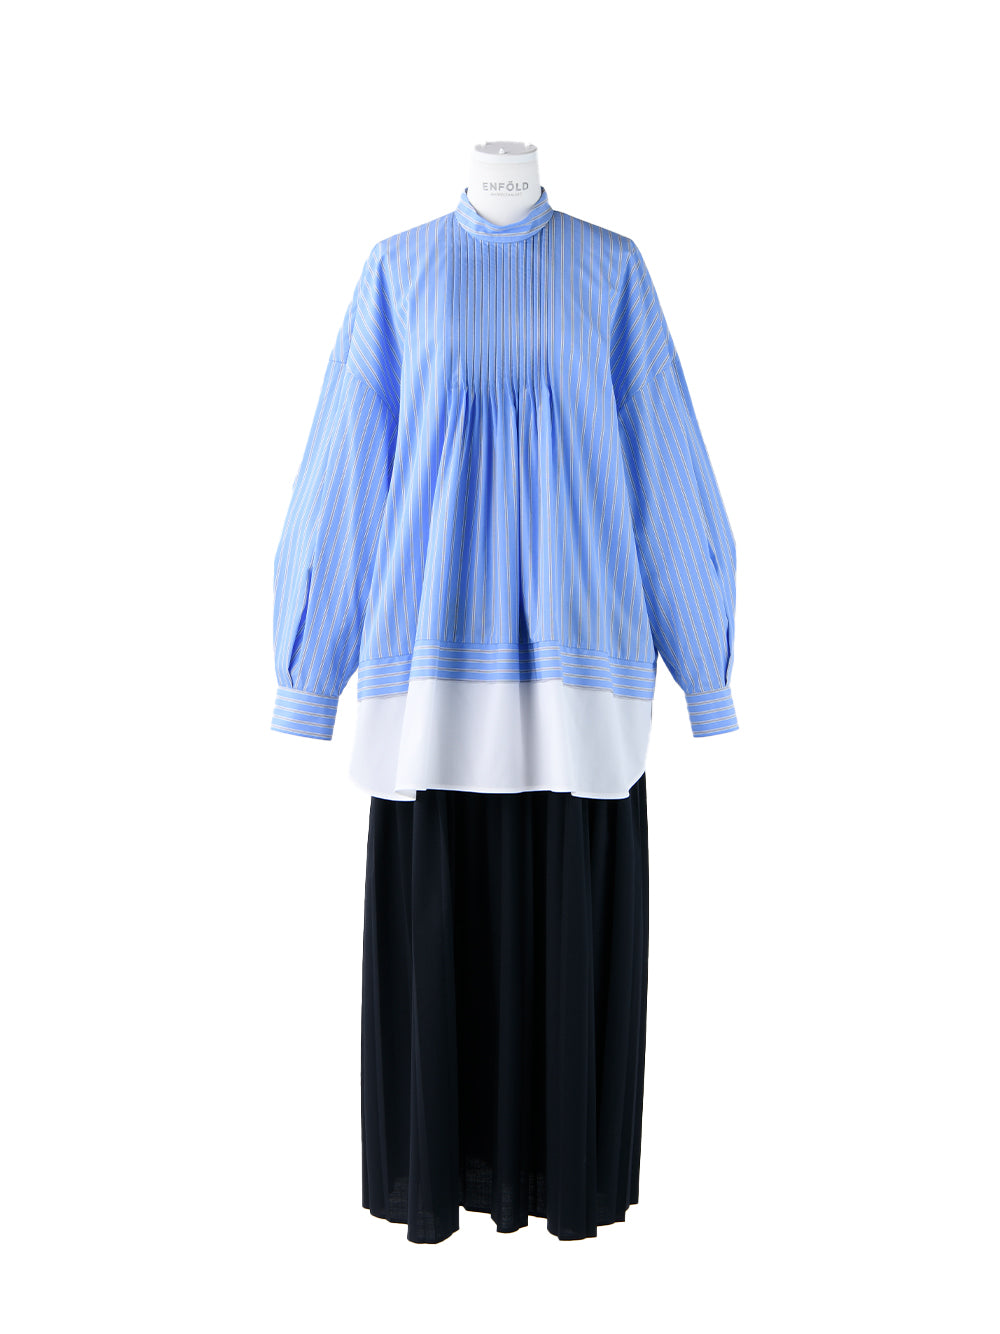 Pleated Layered Dress (Medium Blue)